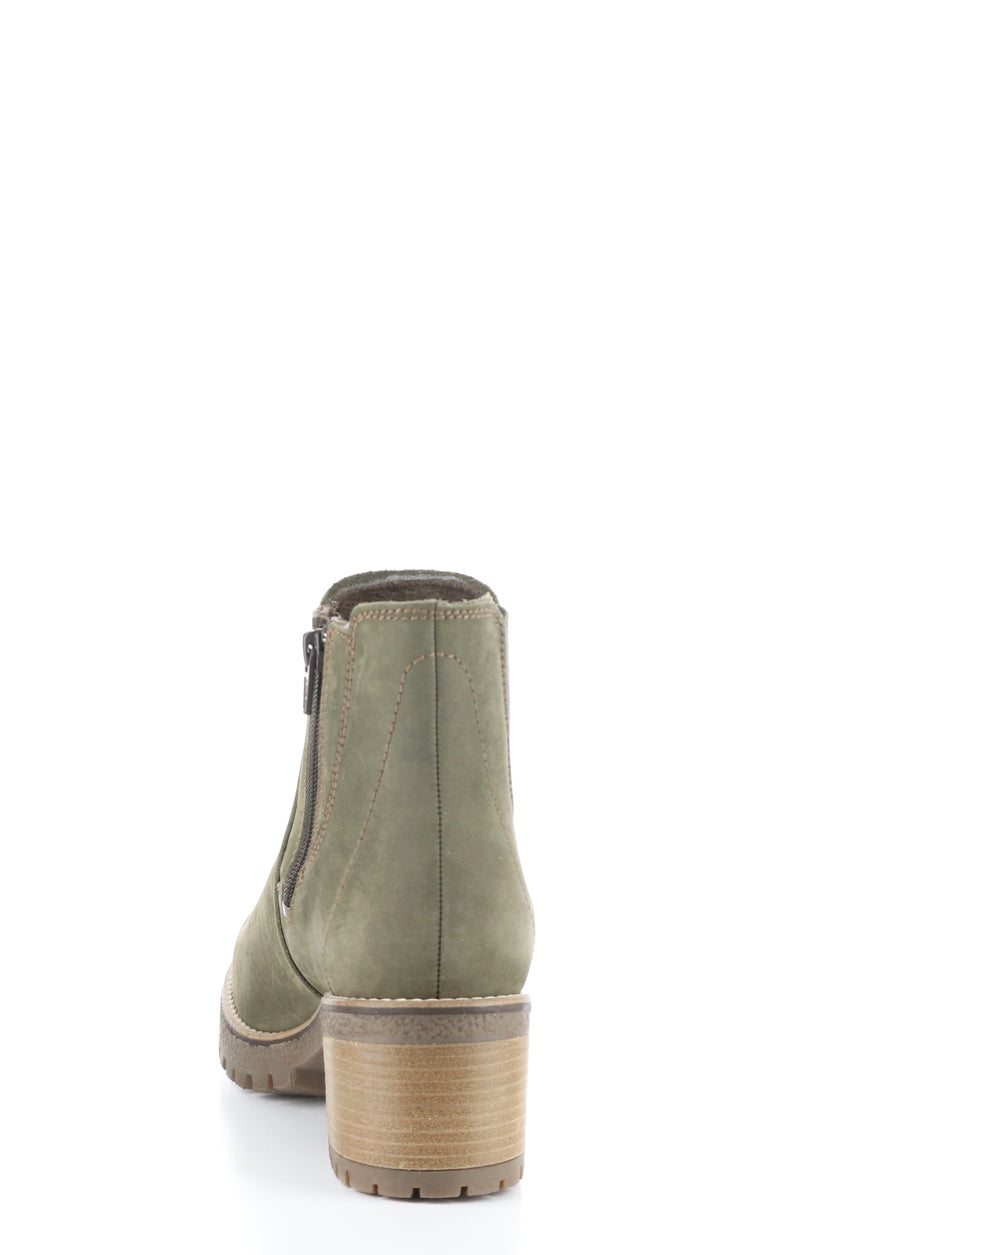 MASS SAGE/DK BROWN Elasticated Boots